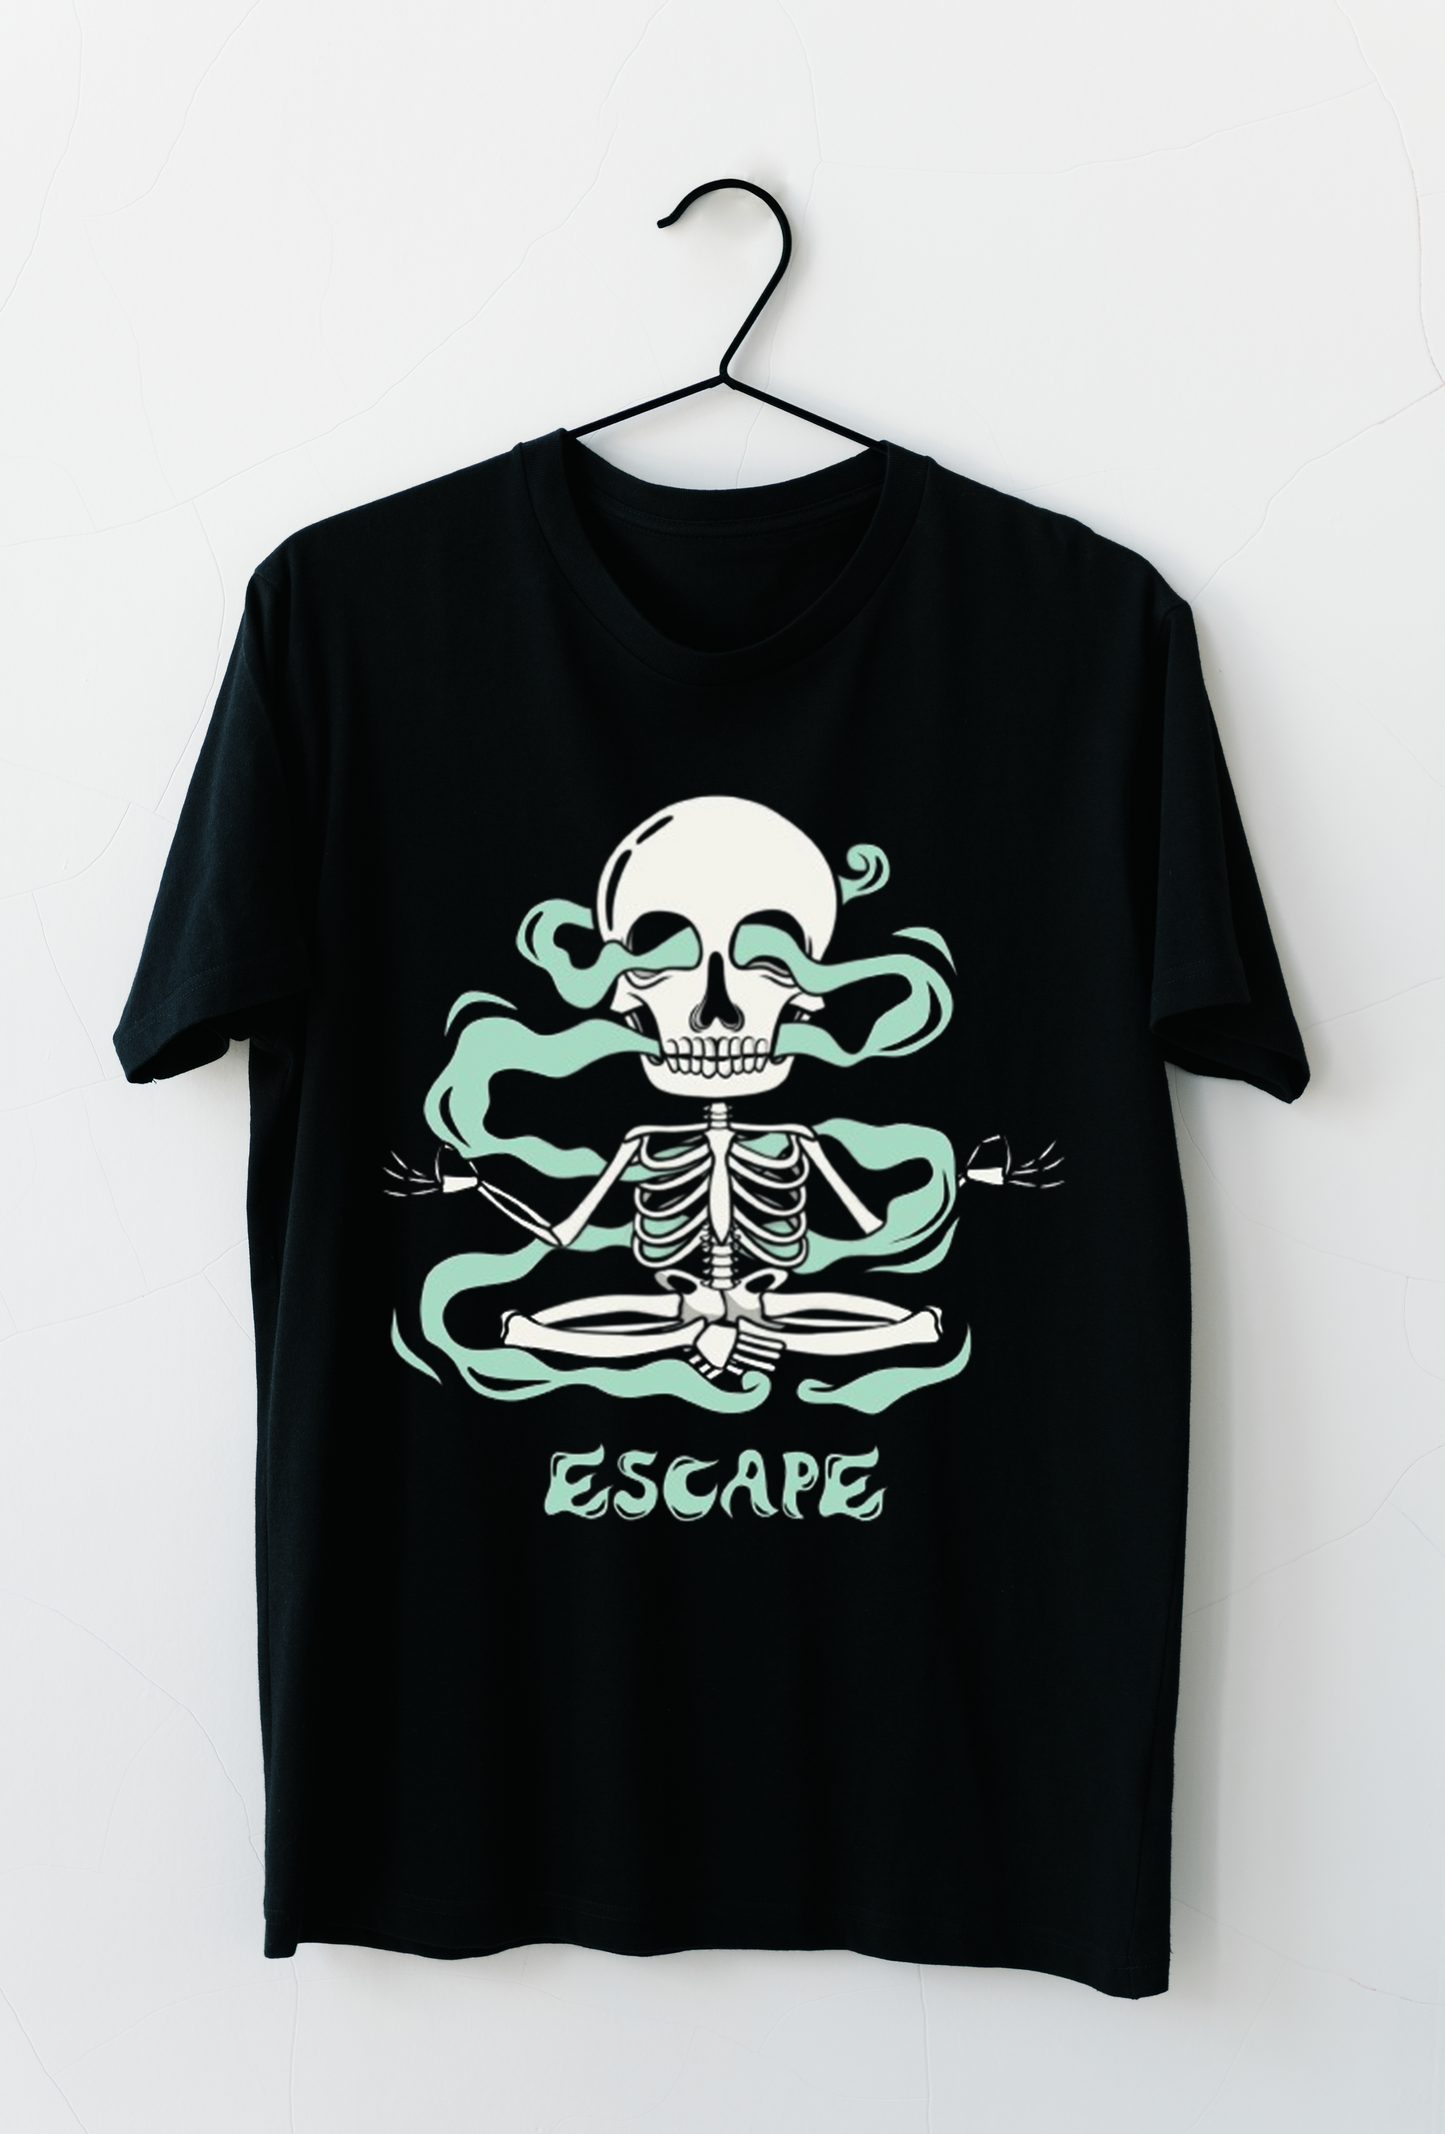 Escape Graphic Tshirt